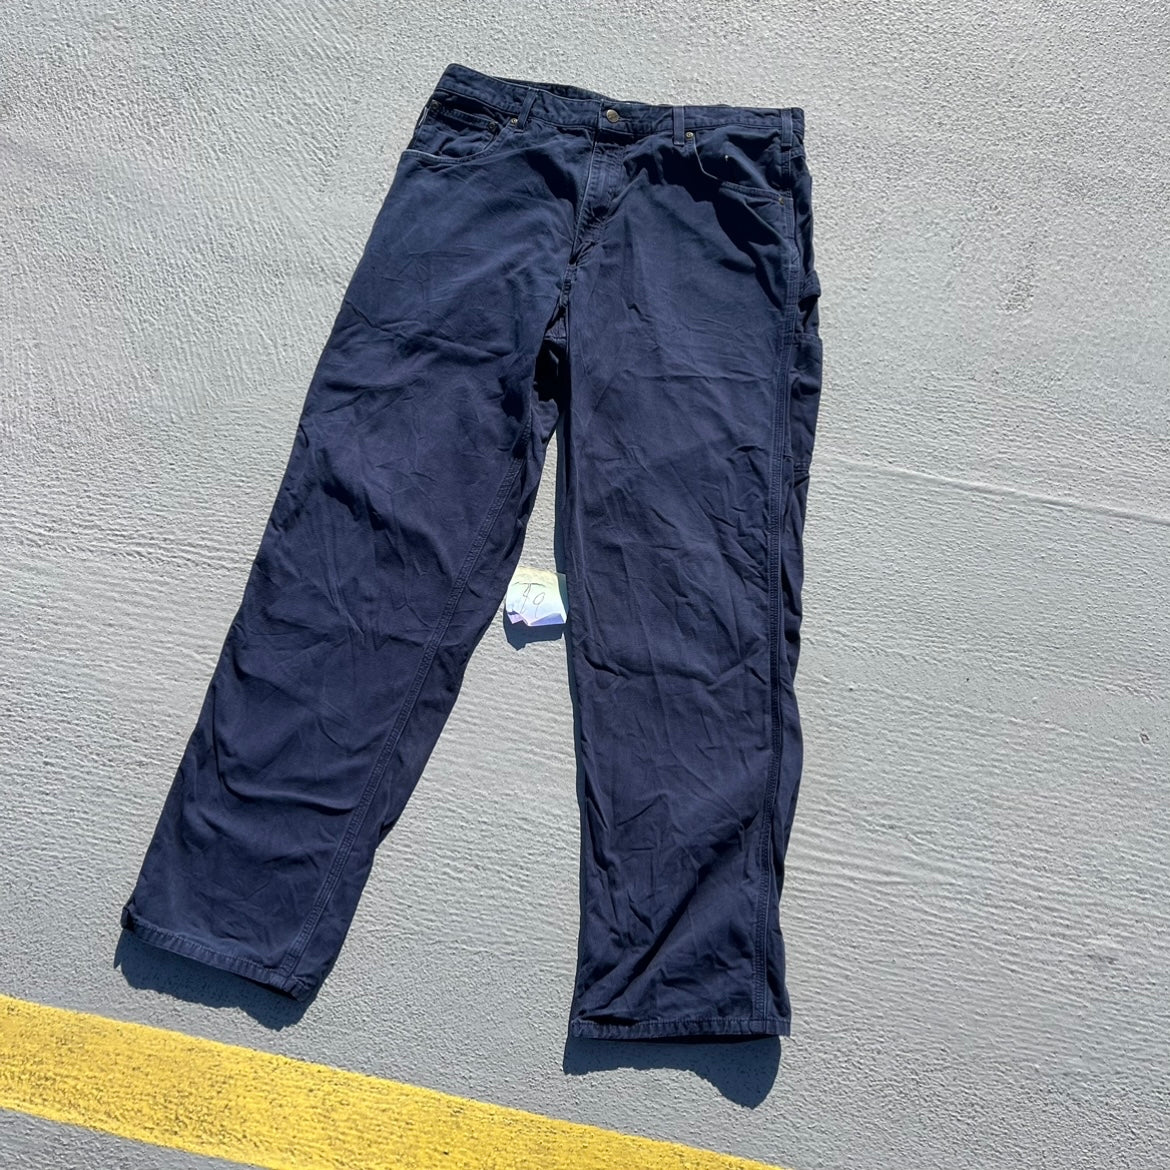 Carhartt Pants Size 38/34